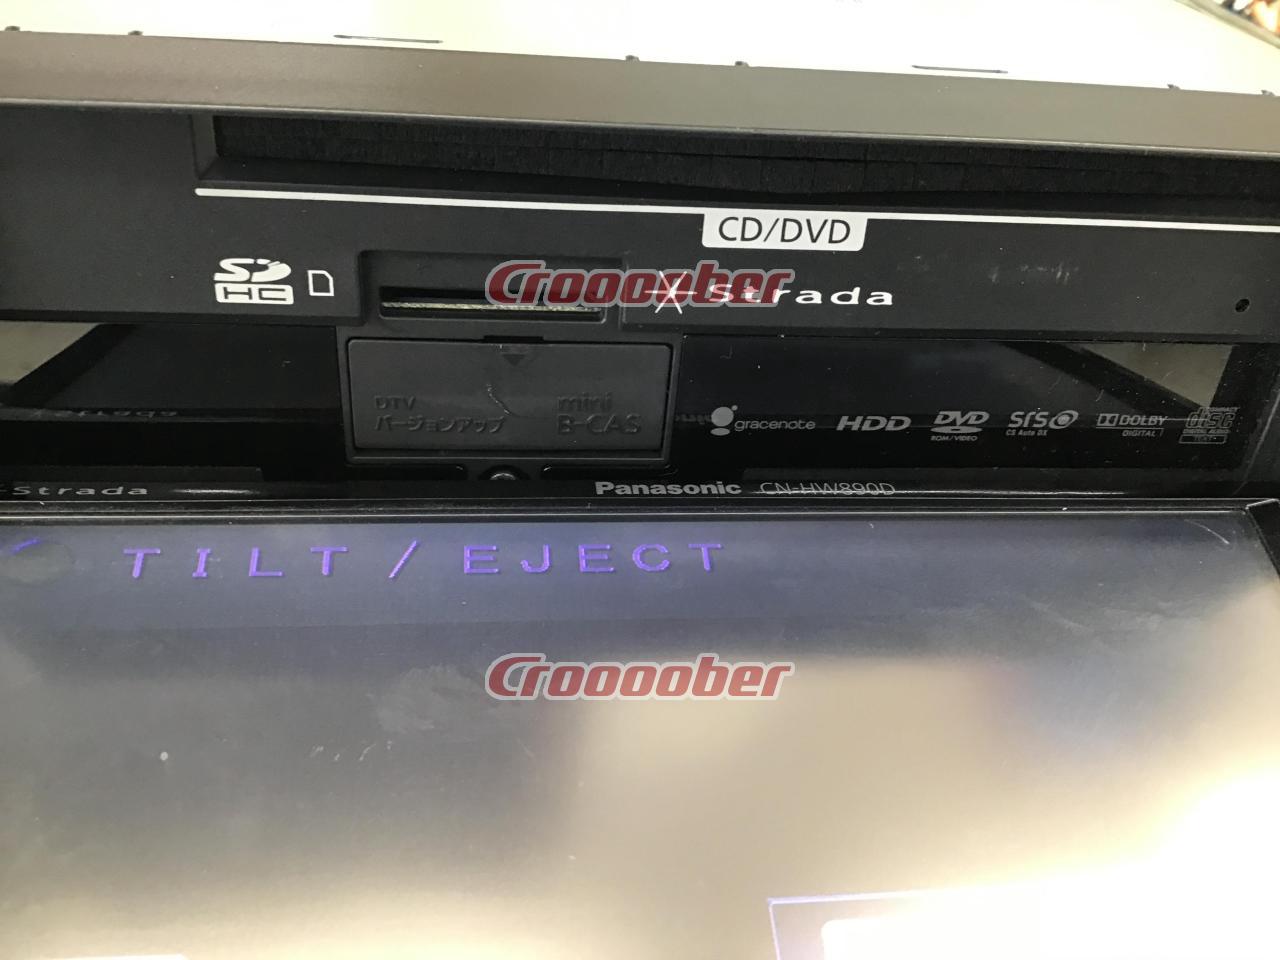 SUBARU Genuine OP Panasonic CN-HW890DFA | HDD Navigation(digital 